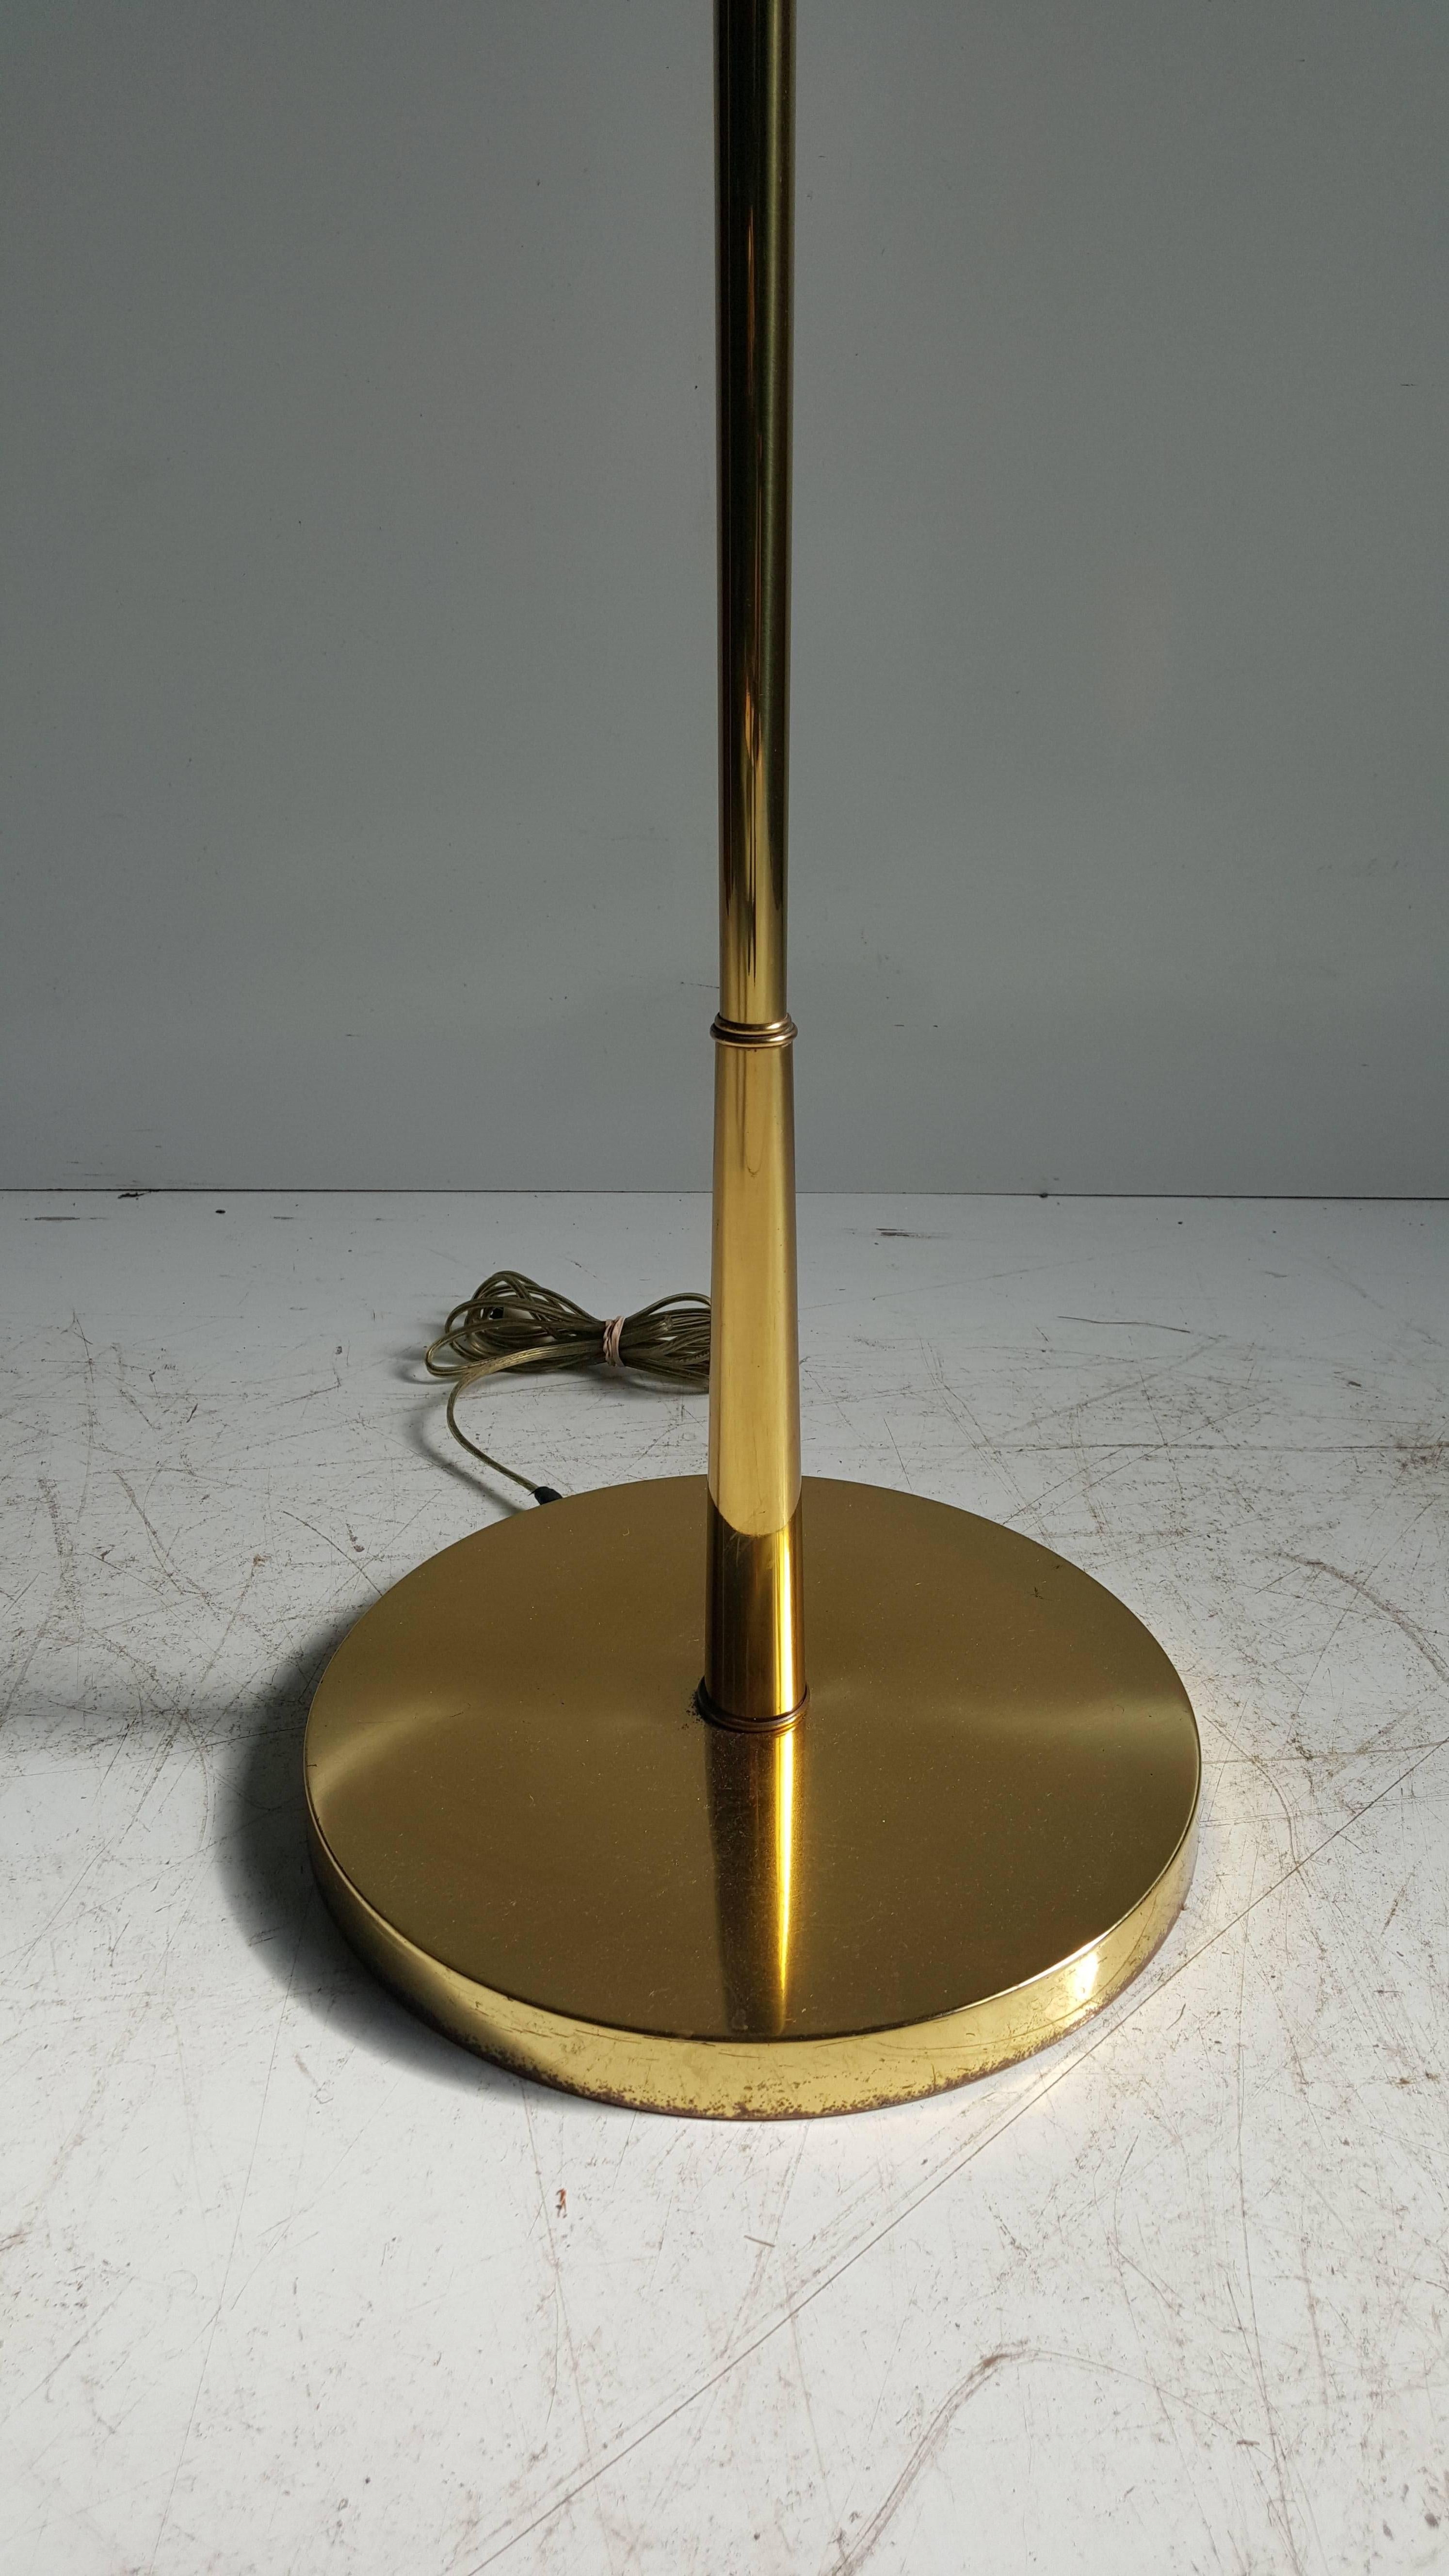 American Rare Brass Four Eyeball Floor Lamp, Modernist, Regency by Stiffel, Parzinger